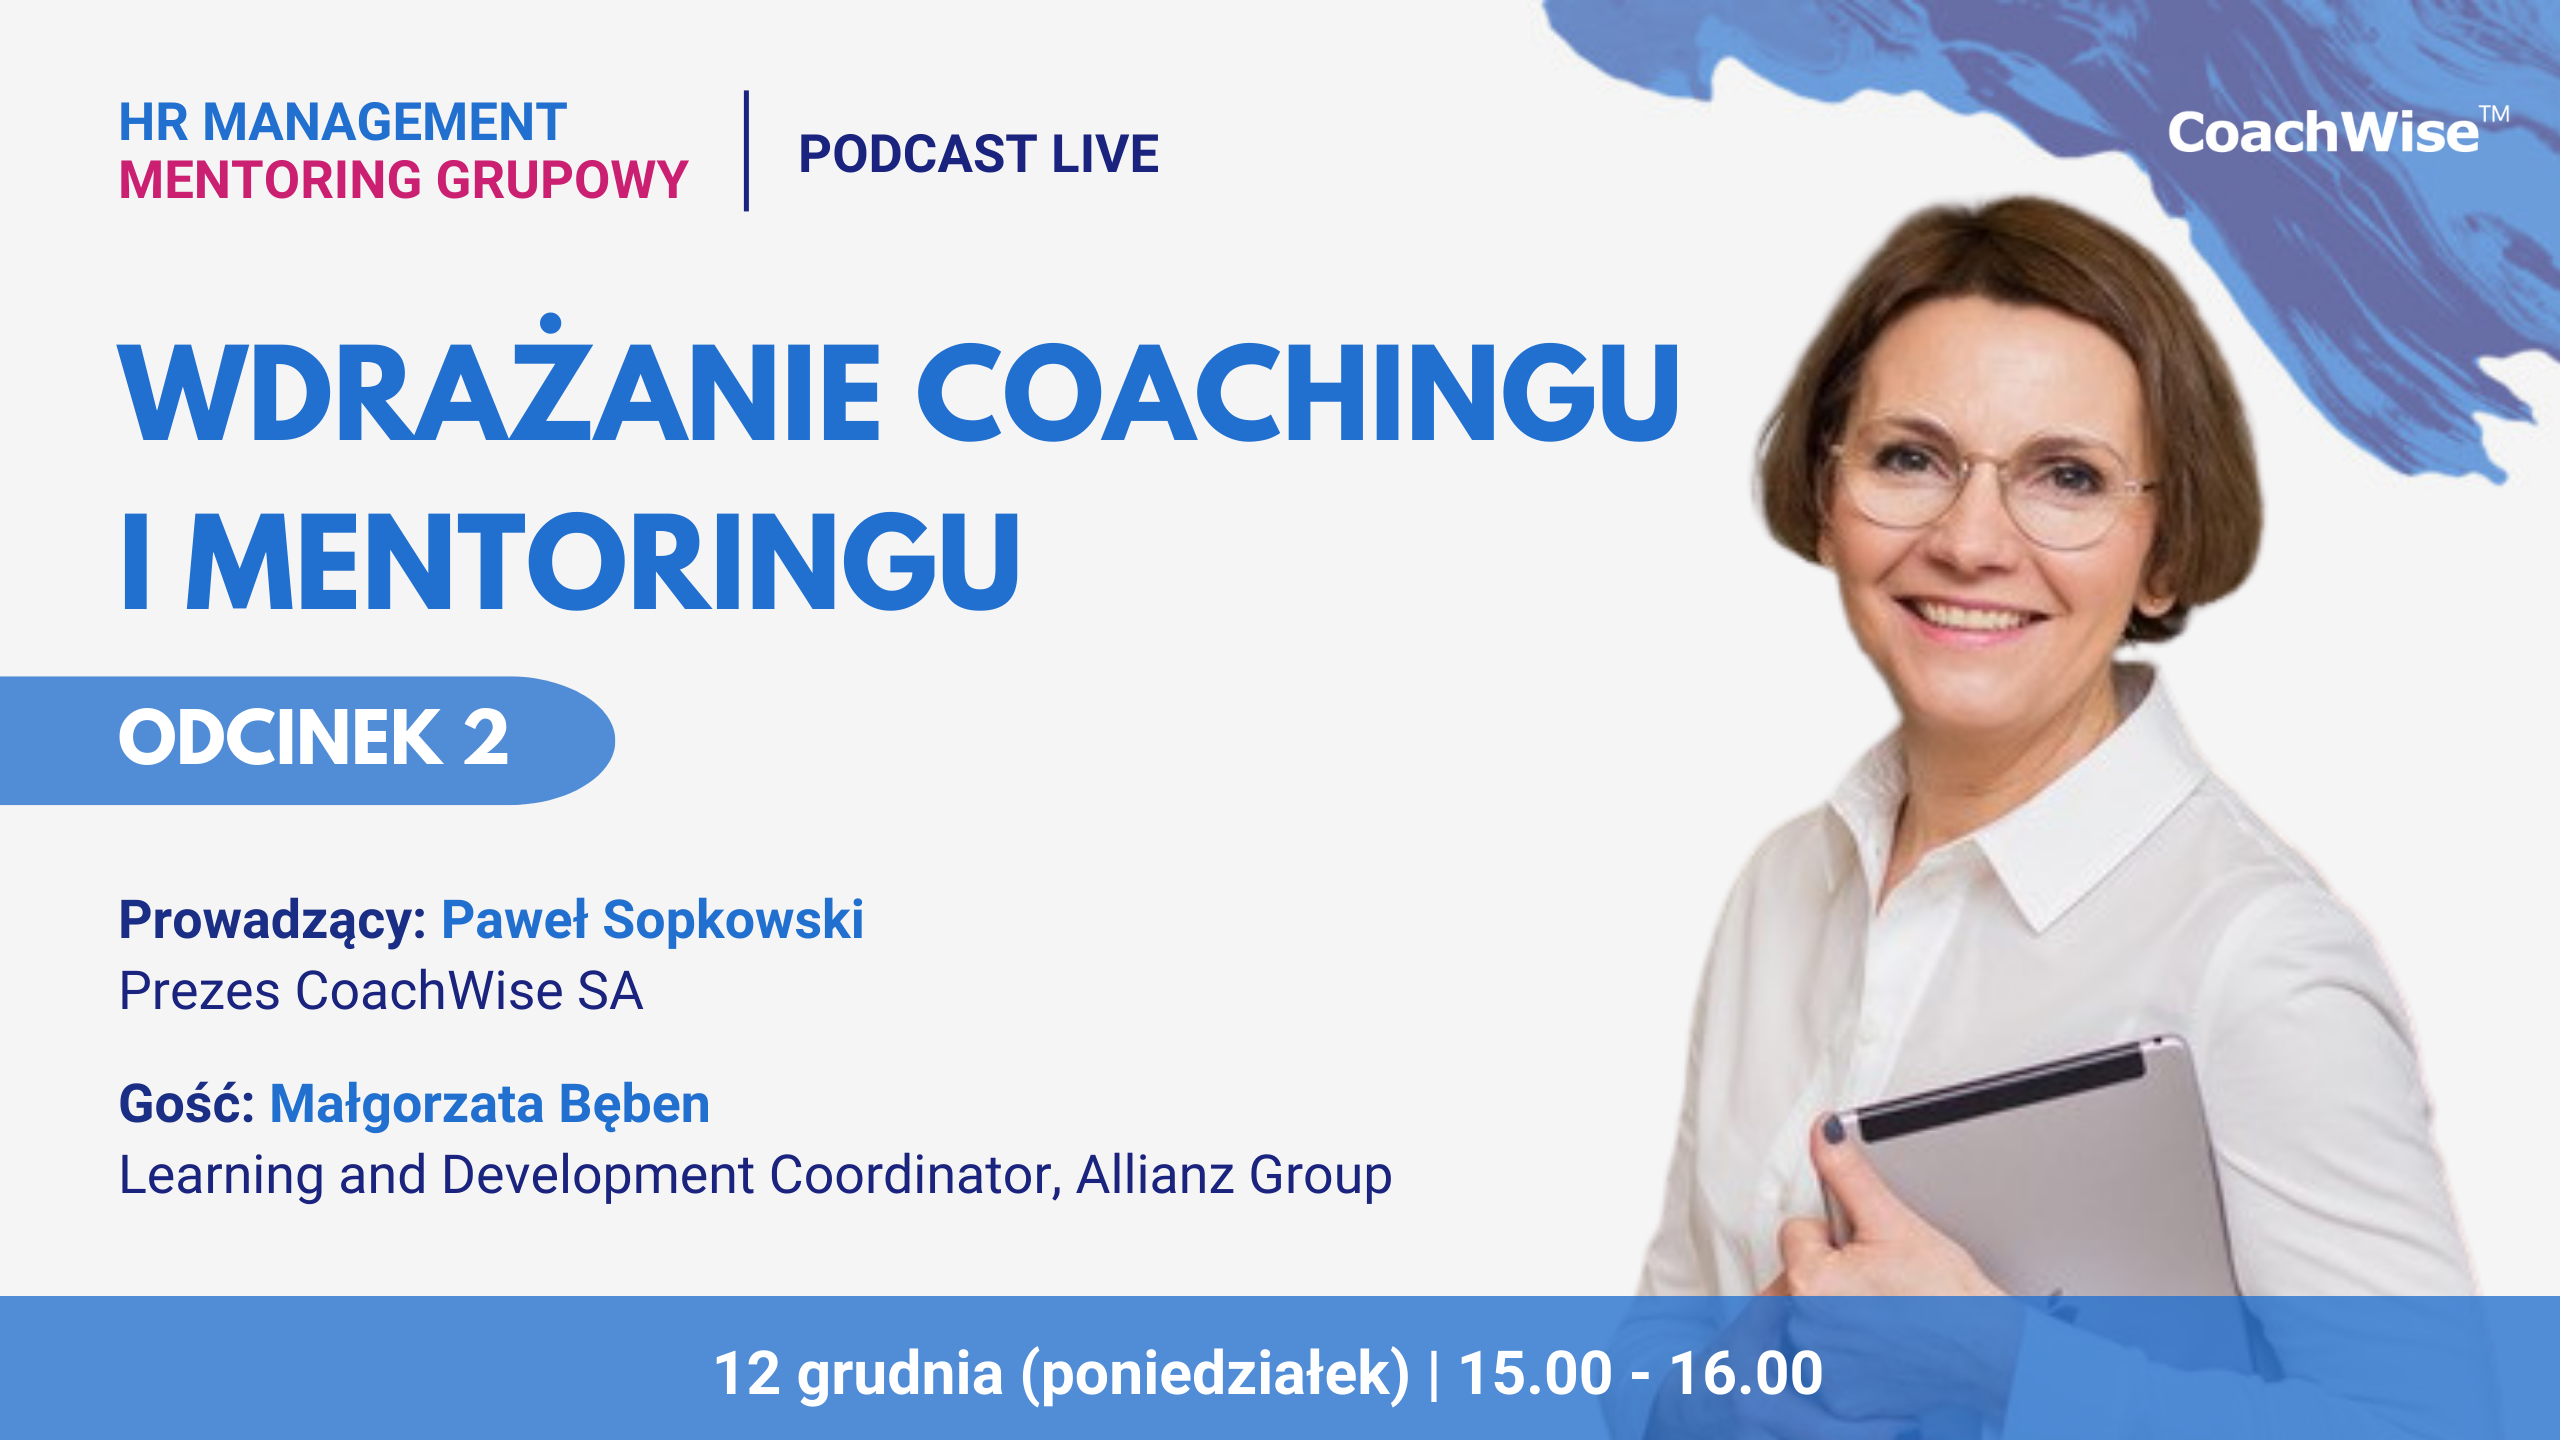 „Wdrażanie coachingu i mentoringu” Podcast Live odc. 2